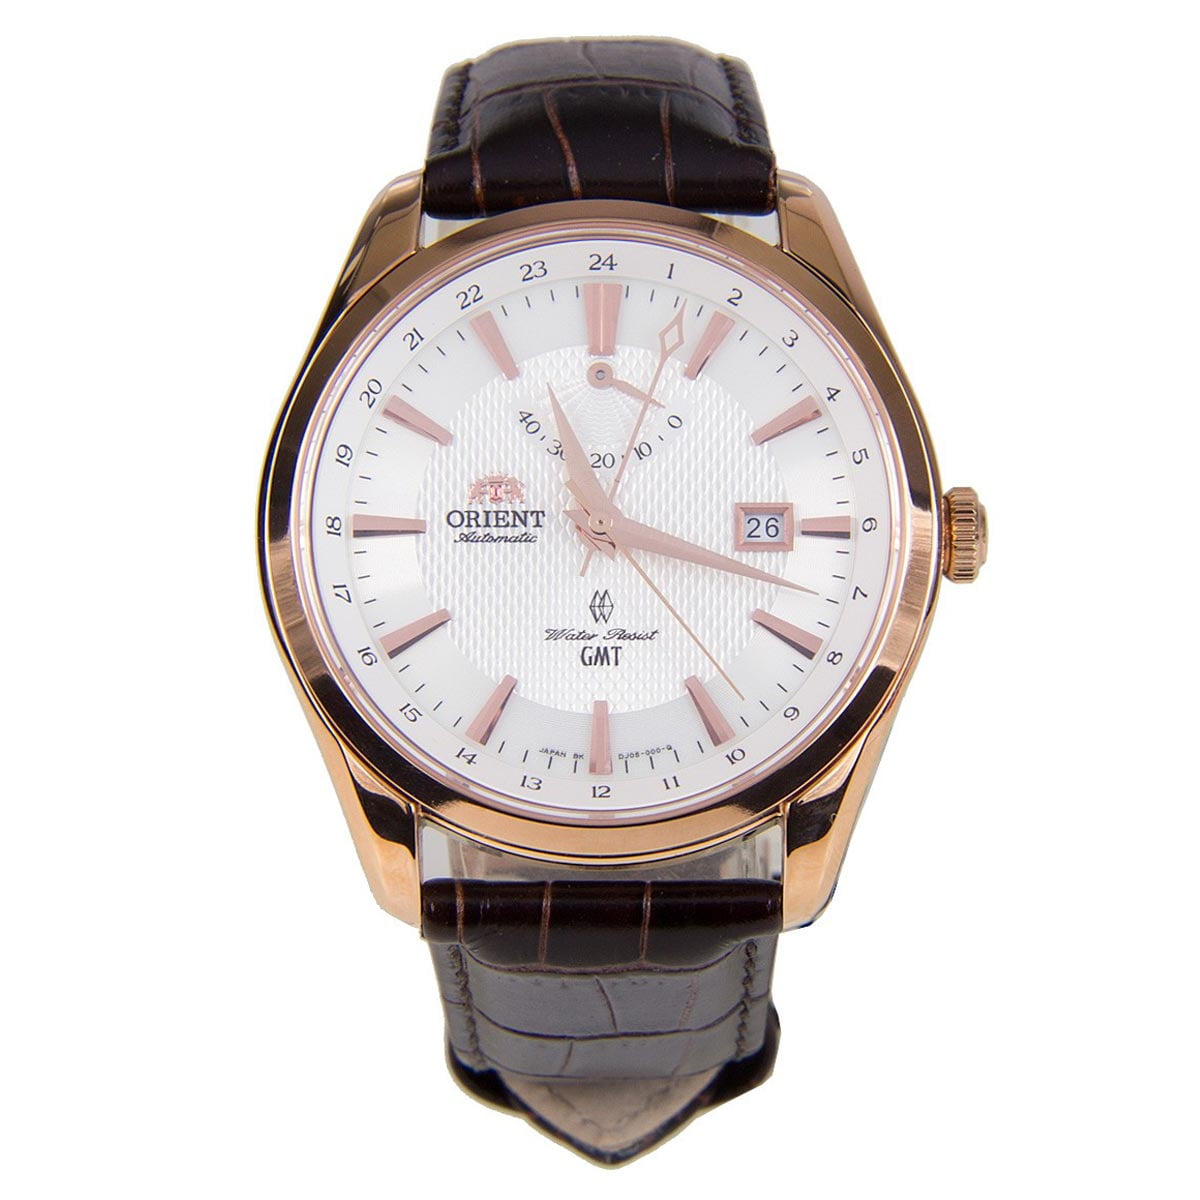 Ручные часы автоподзавод. Наручные часы Orient dj05001w. Orient dj05003w. Orient Polaris GMT. Часы Ориент GMT.